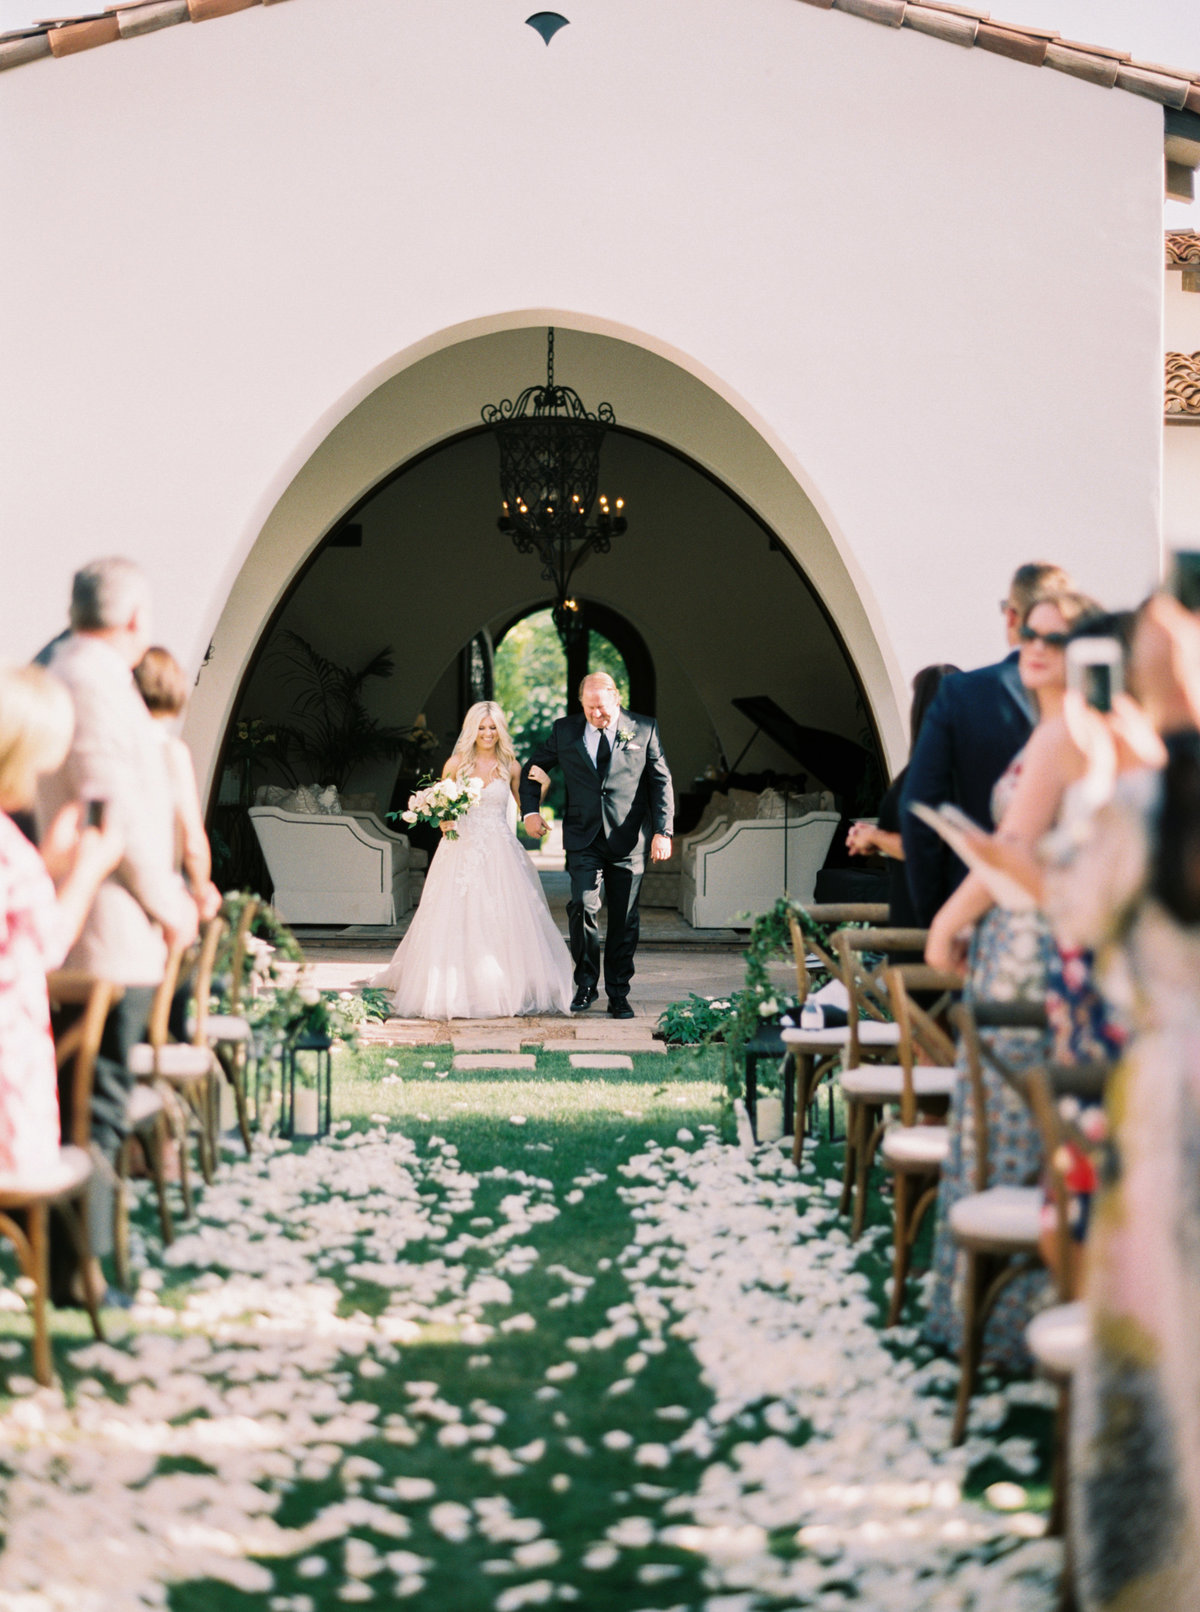 Kendall & Joe | Paradise Valley, Arizona | Mary Claire Photography | Arizona & Destination Fine Art Wedding Photographer